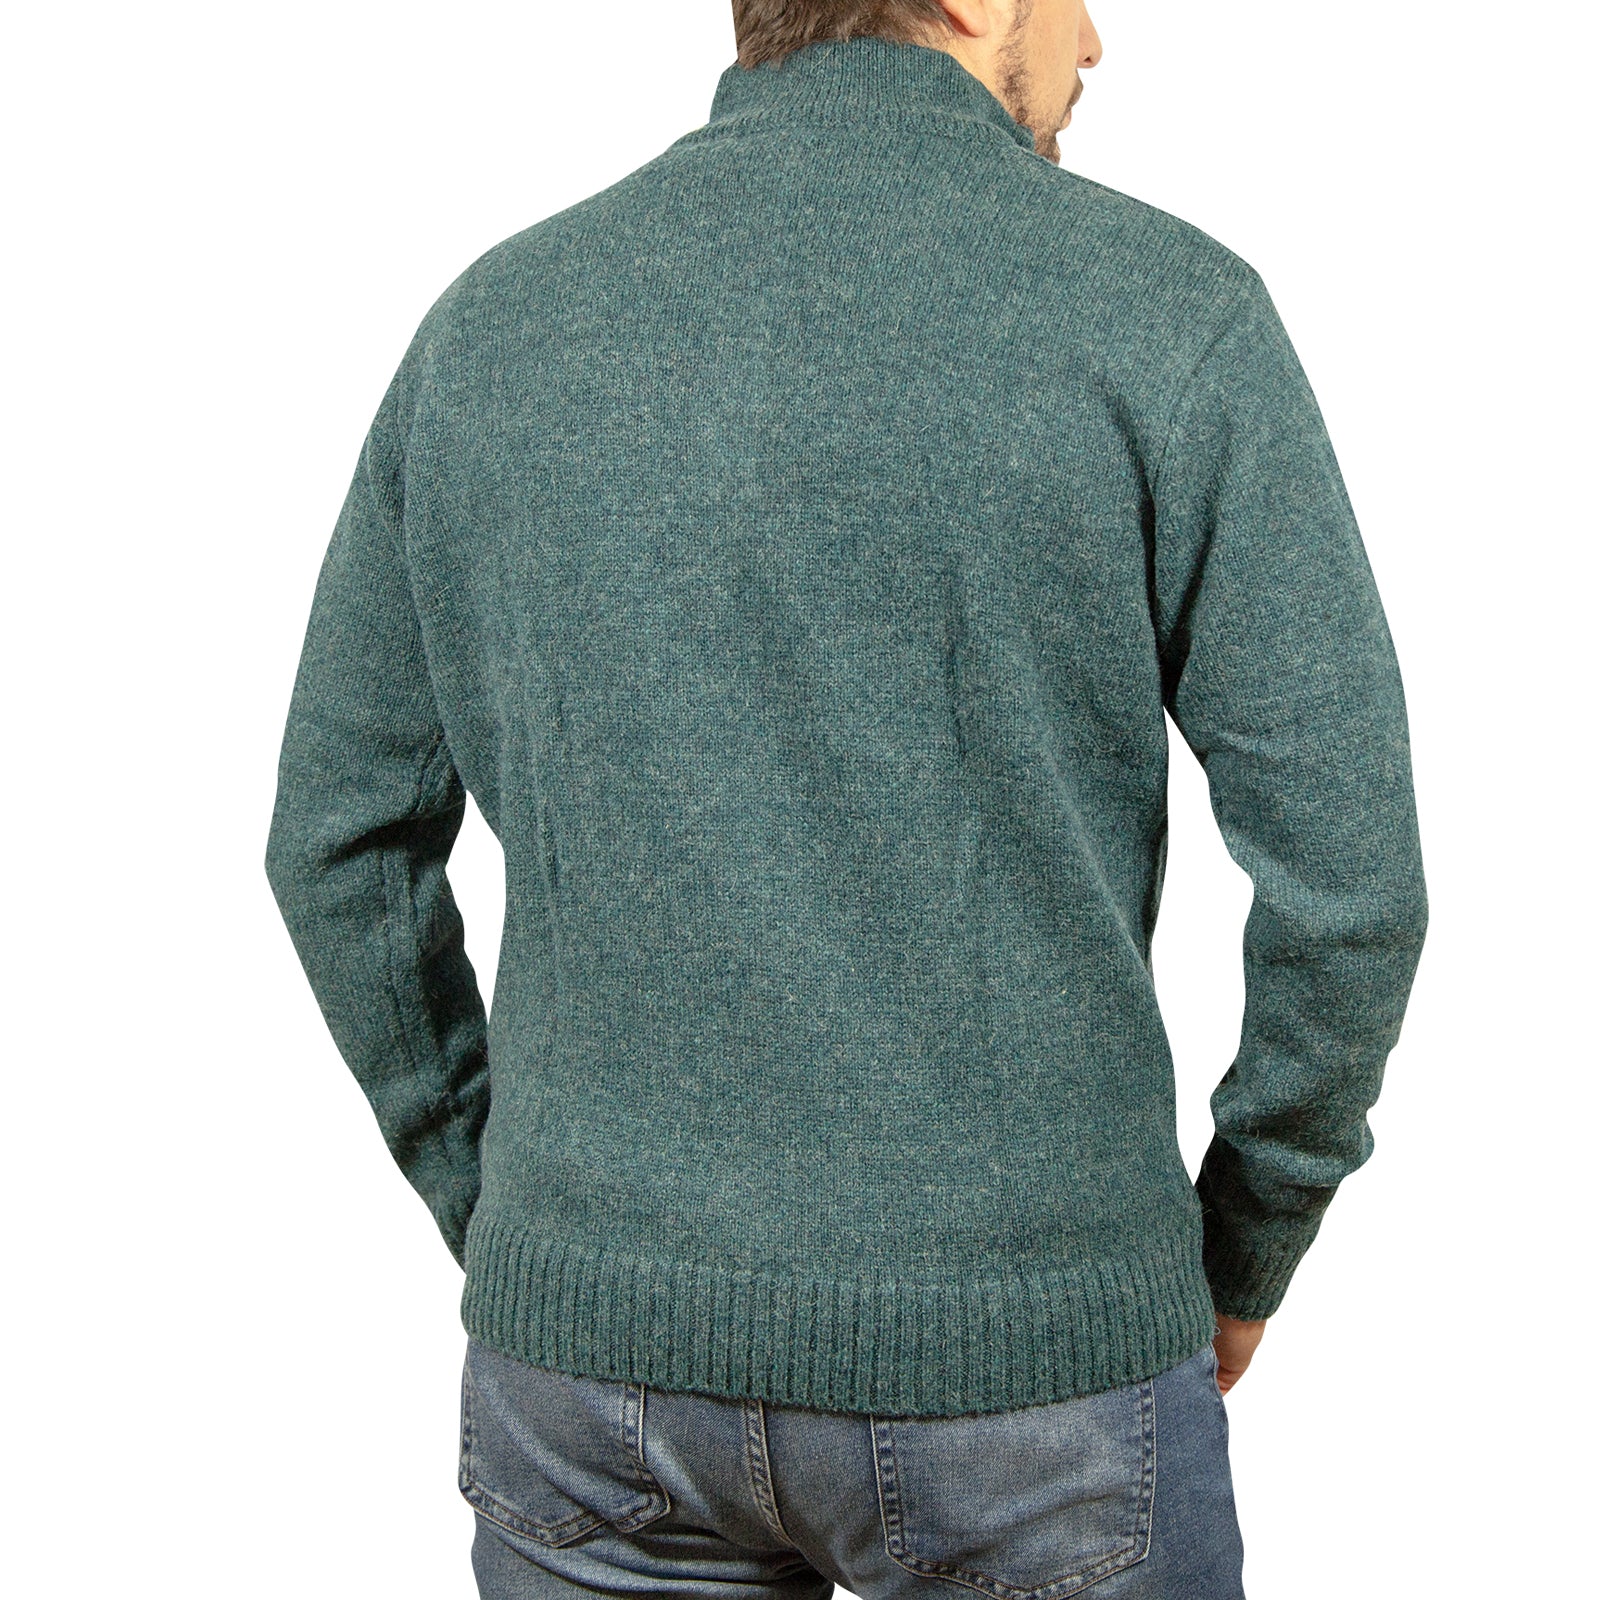 100% SHETLAND WOOL Half Zip Up Knit JUMPER Pullover Mens Sweater Knitted - Sherwood (32) - S